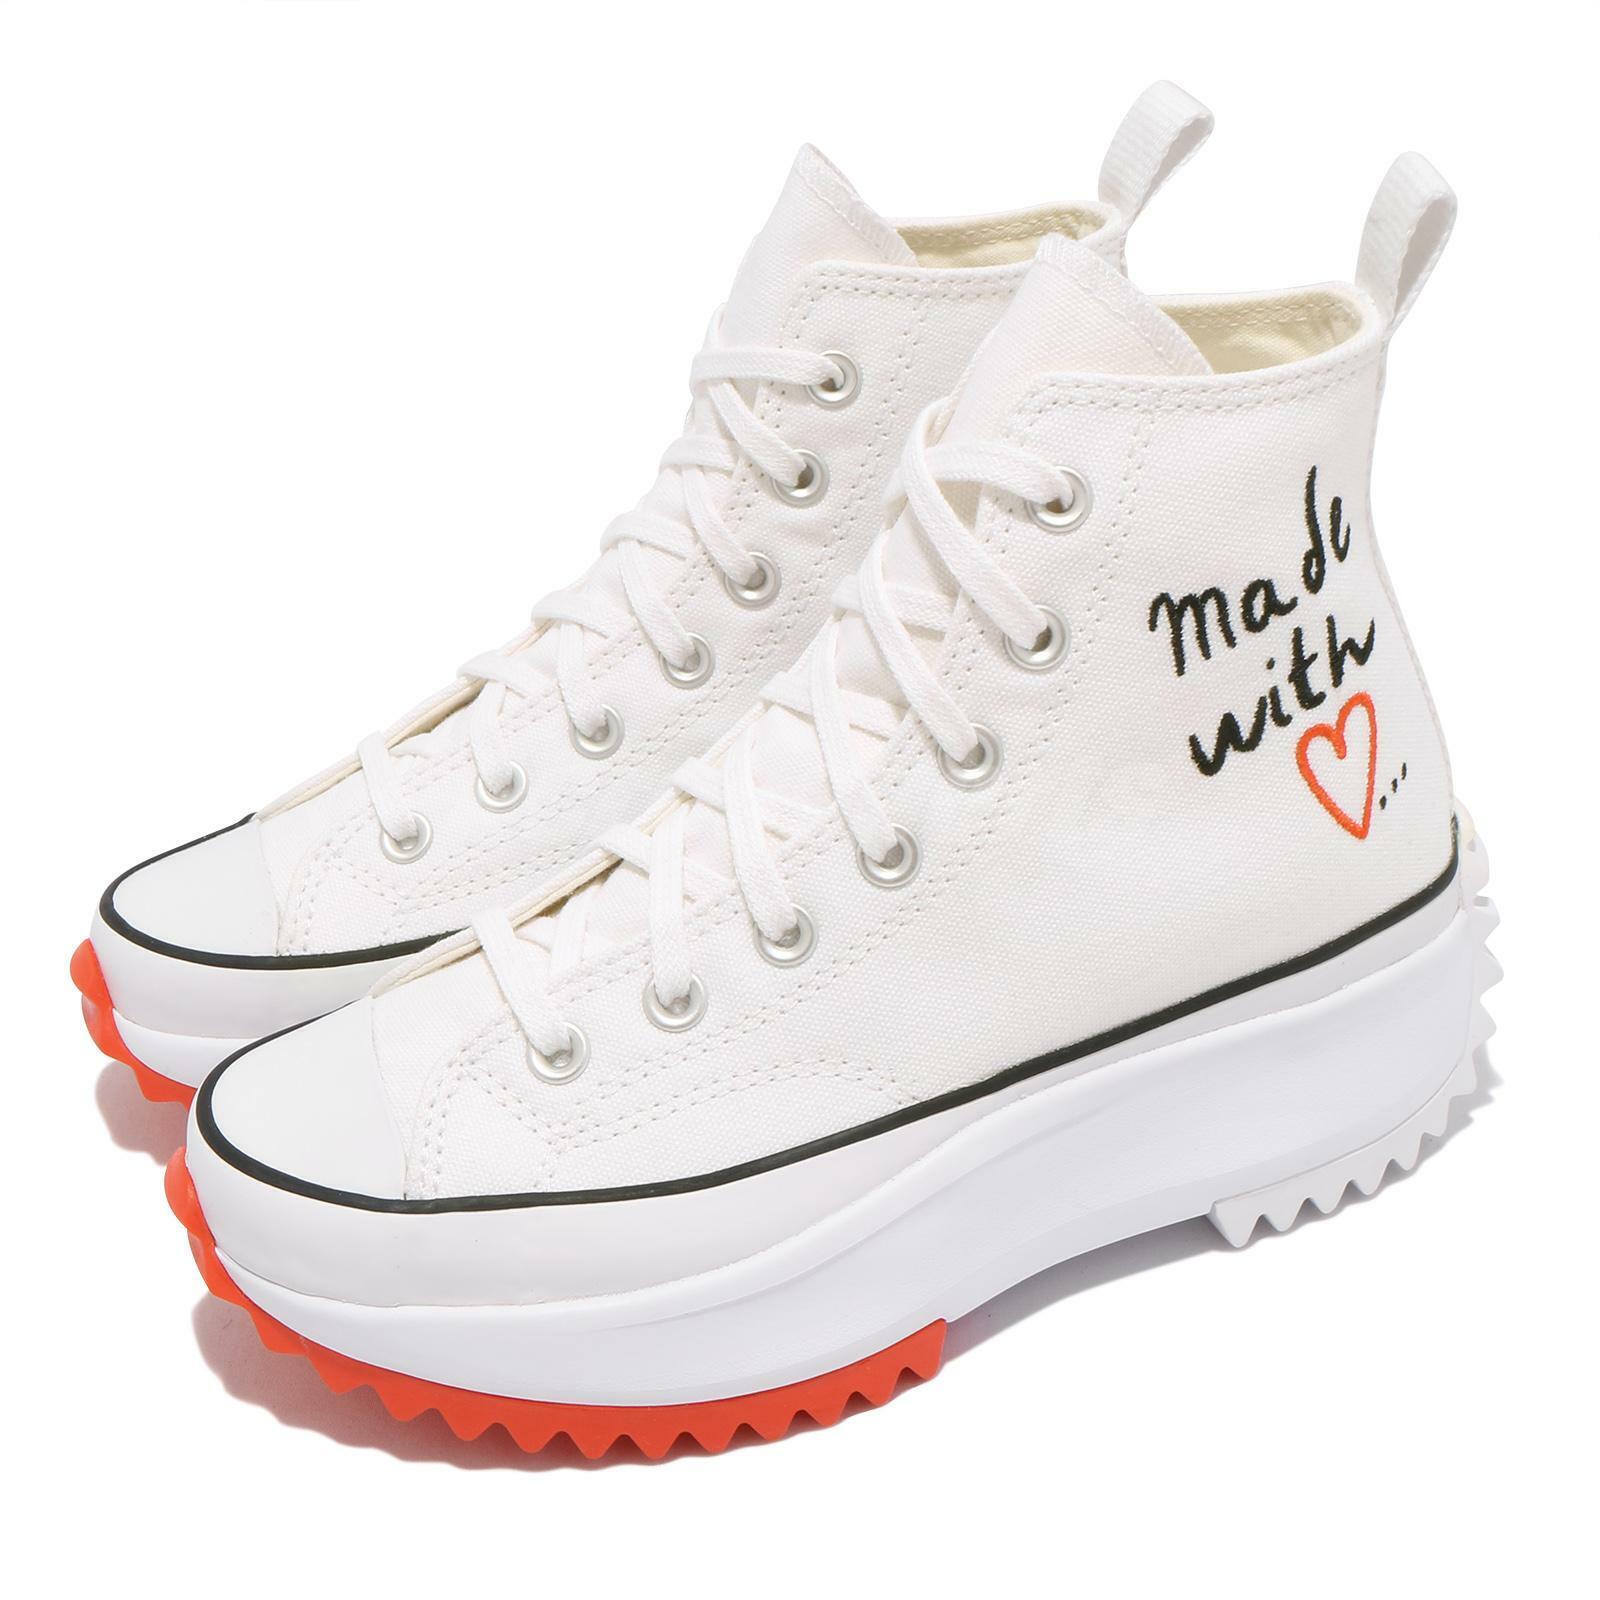 Converse Run Star Hike Made With Love White Black Orange Women Shoes 571874C